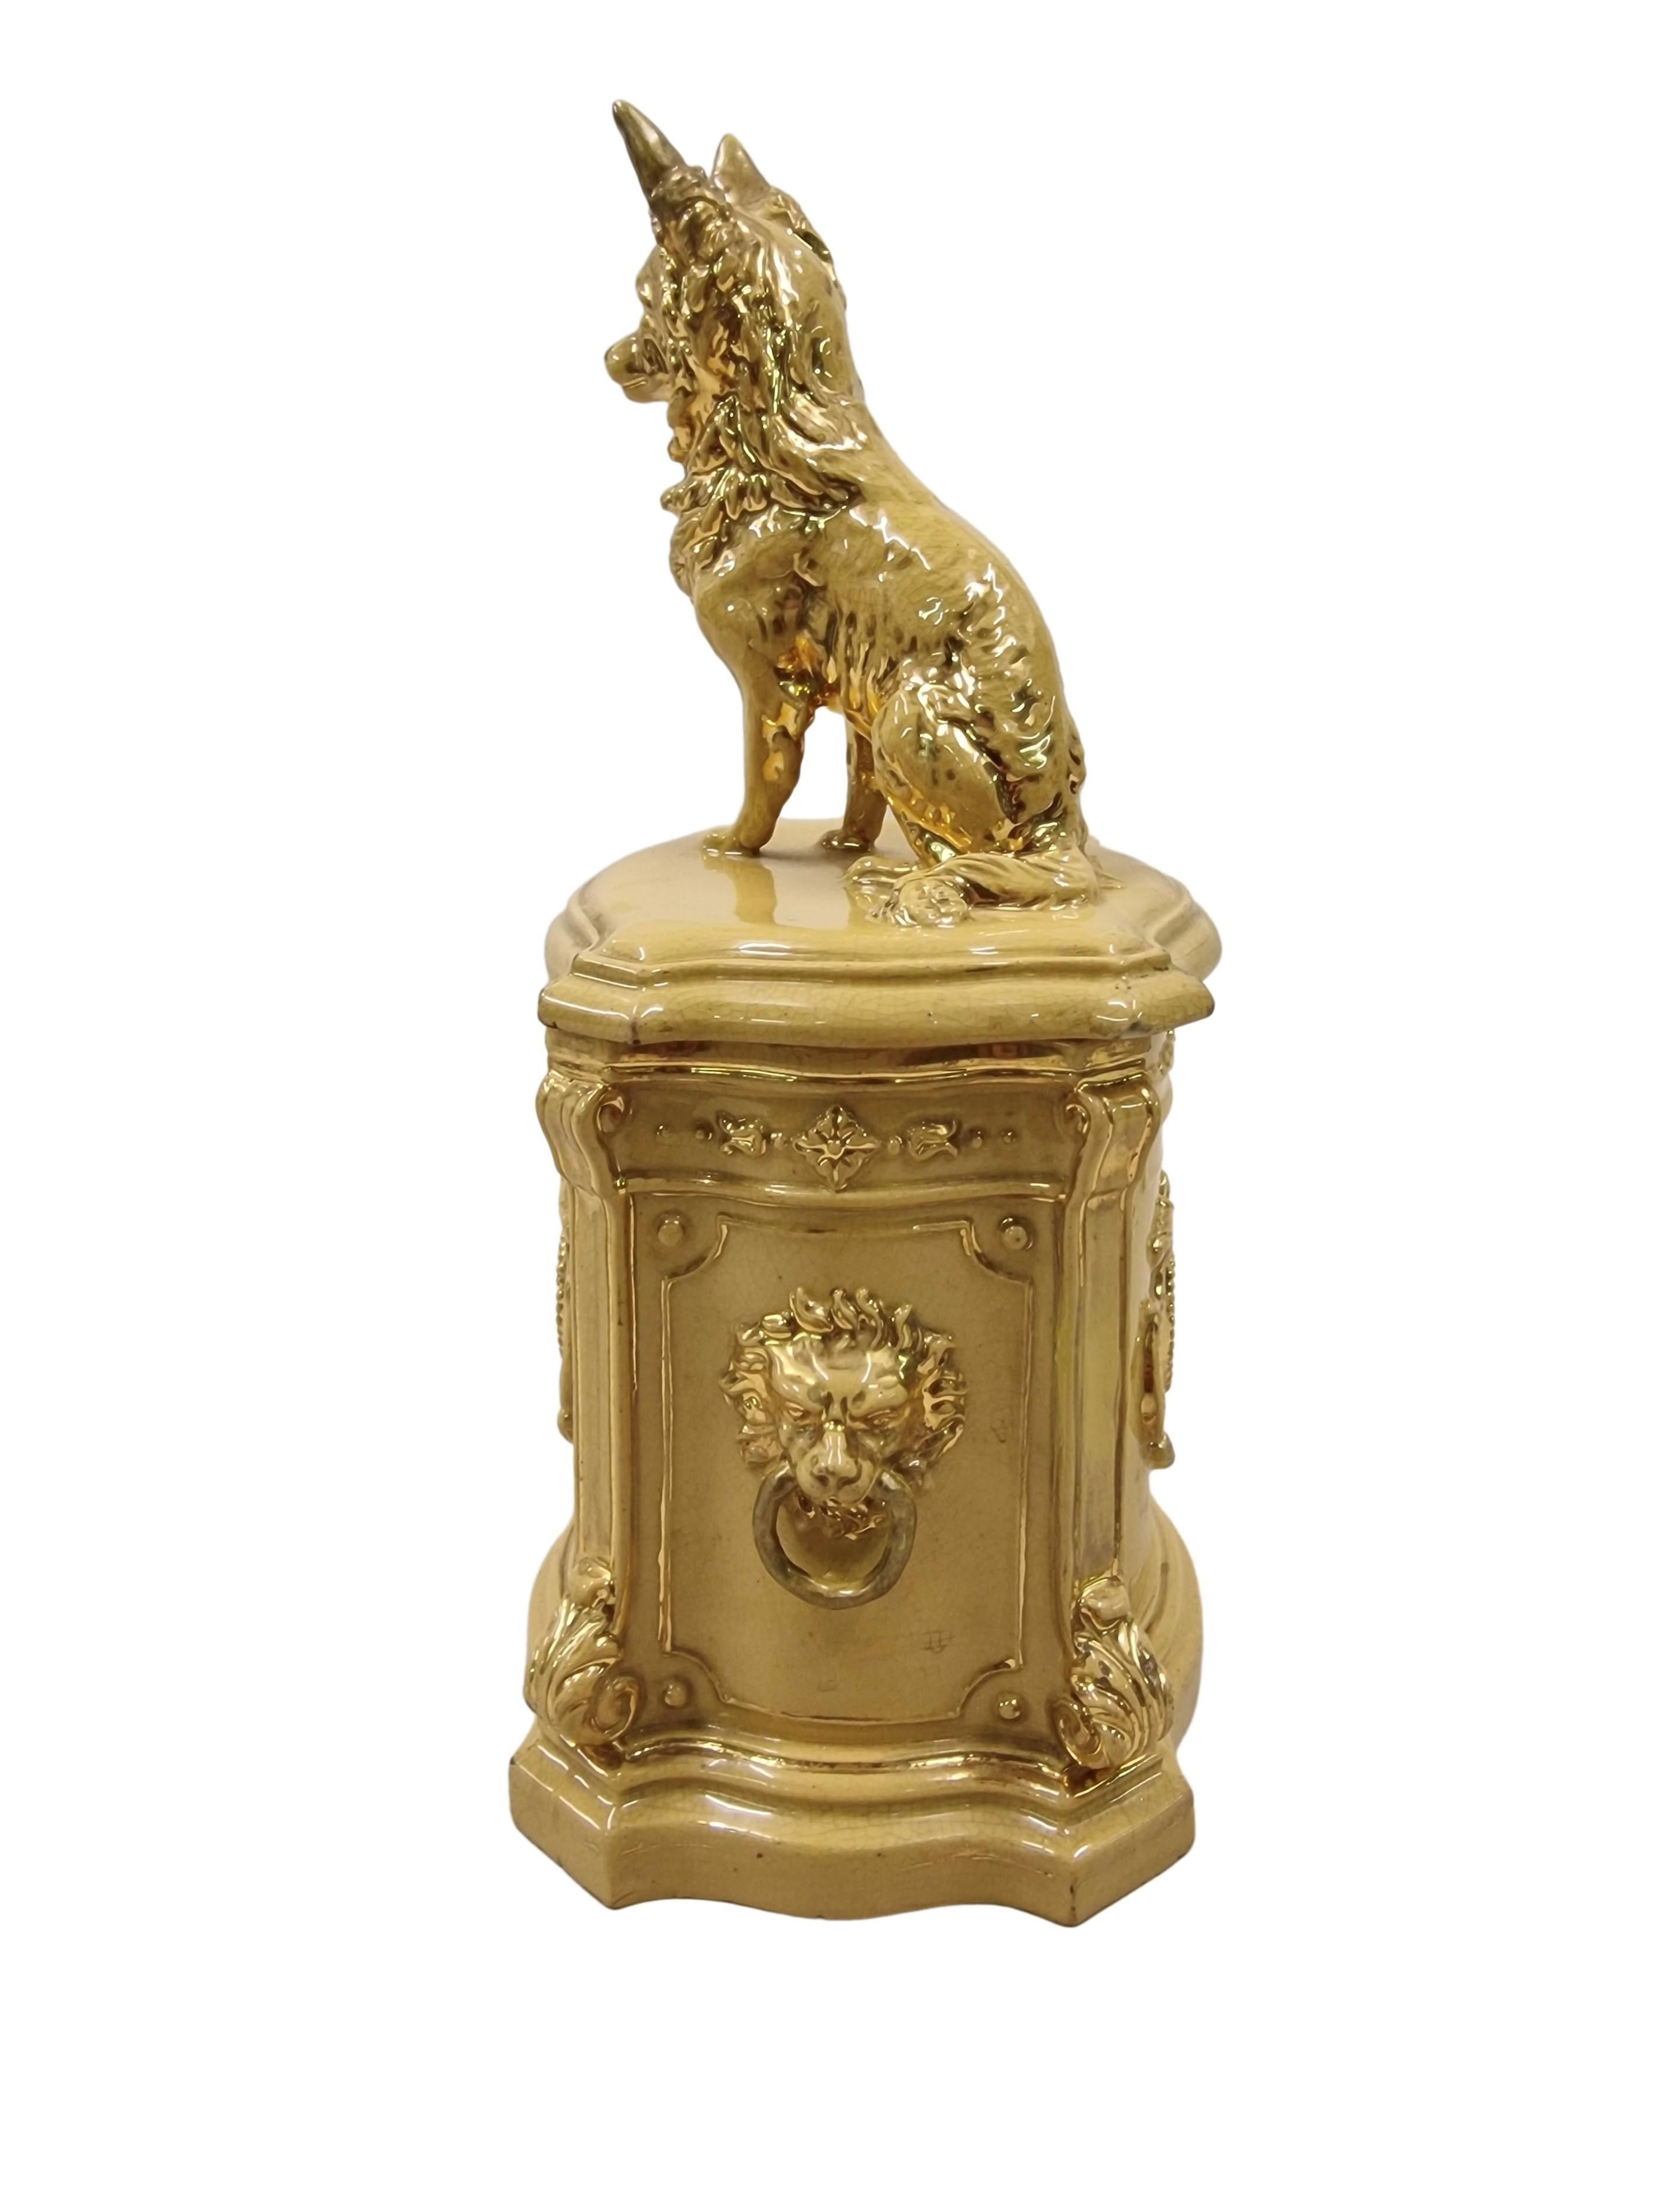 Charming snuff tobacco box, dog, animal, Bernhard Bloch, 1880s, Bohemia Austria For Sale 2